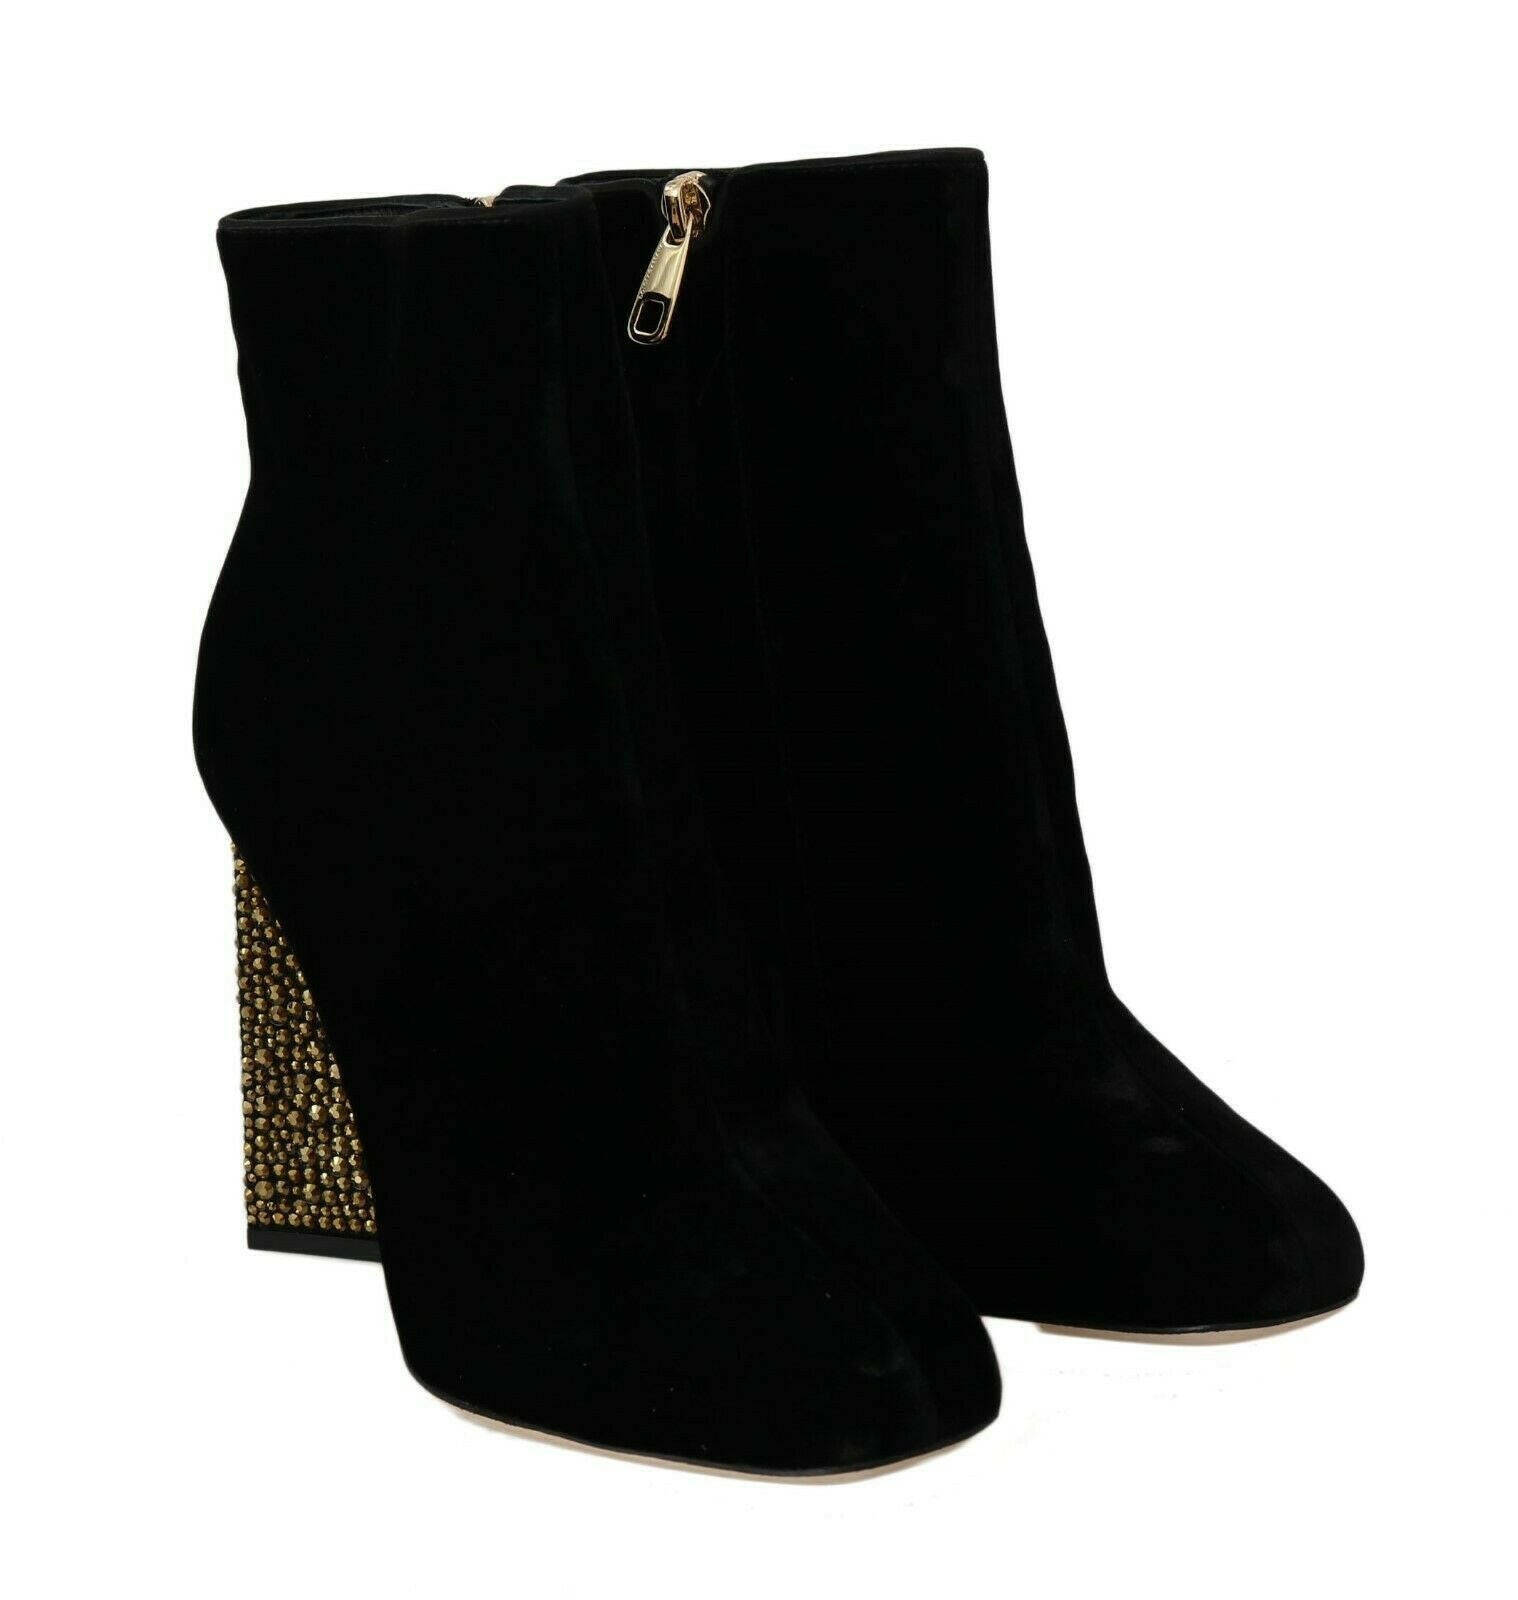 Dolce & Gabbana Black Velvet Crystal Square Heels Shoes - GENUINE AUTHENTIC BRAND LLC  